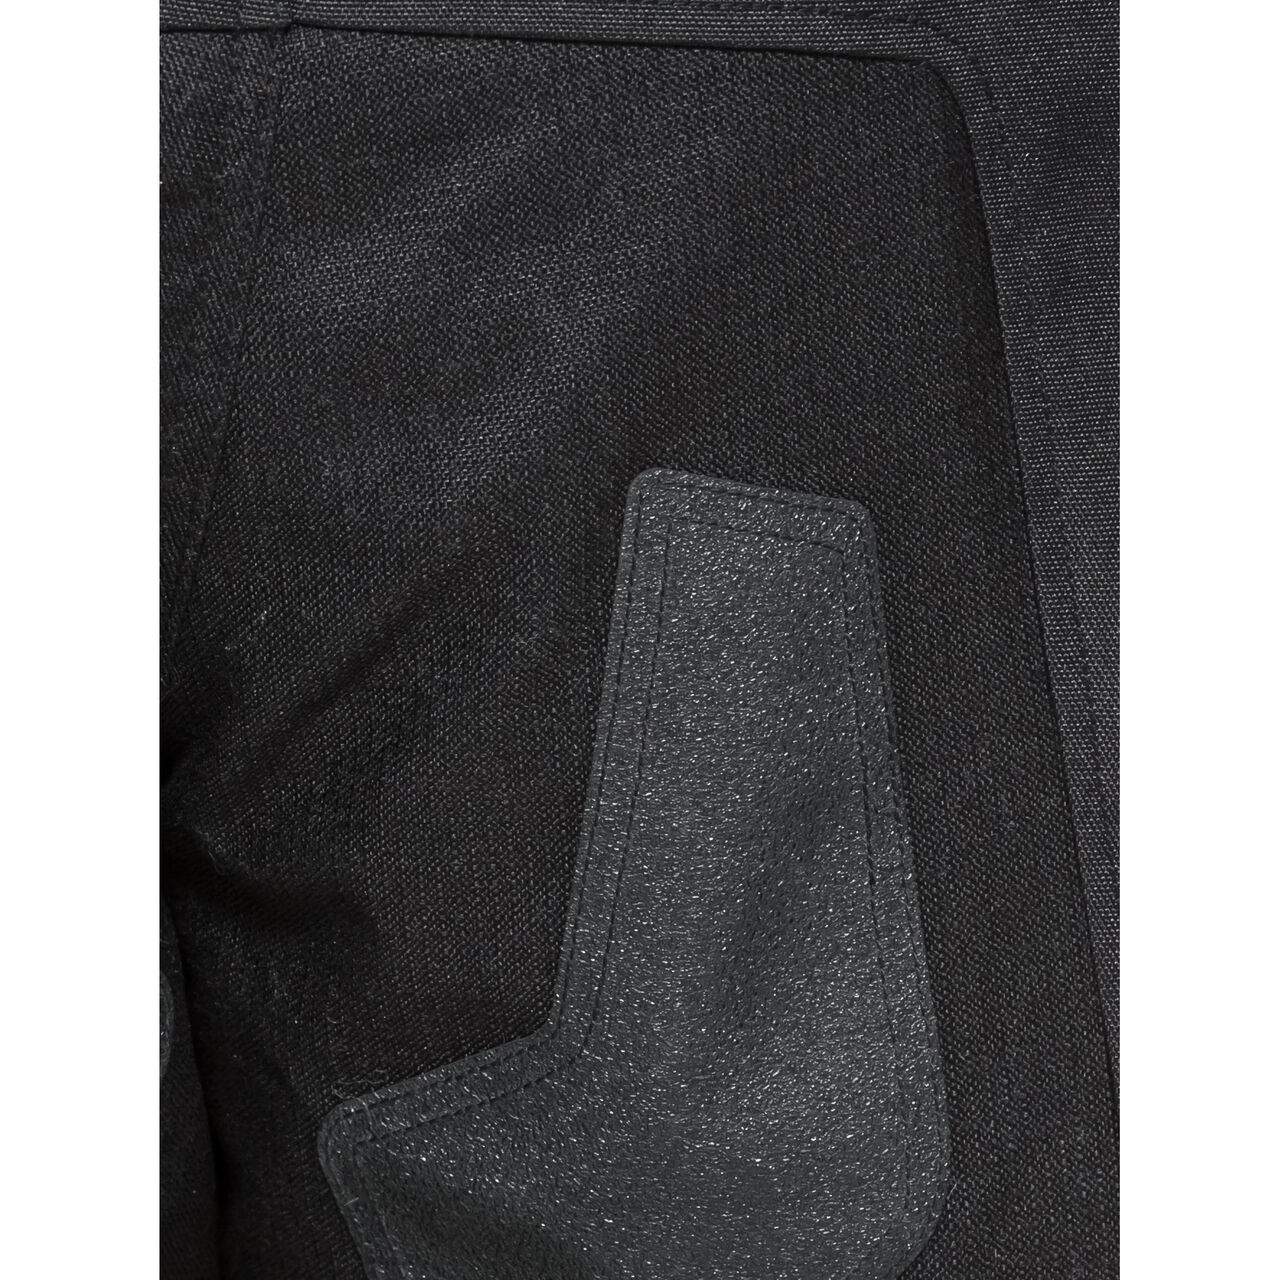 Cedar WP Textilhose schwarz L